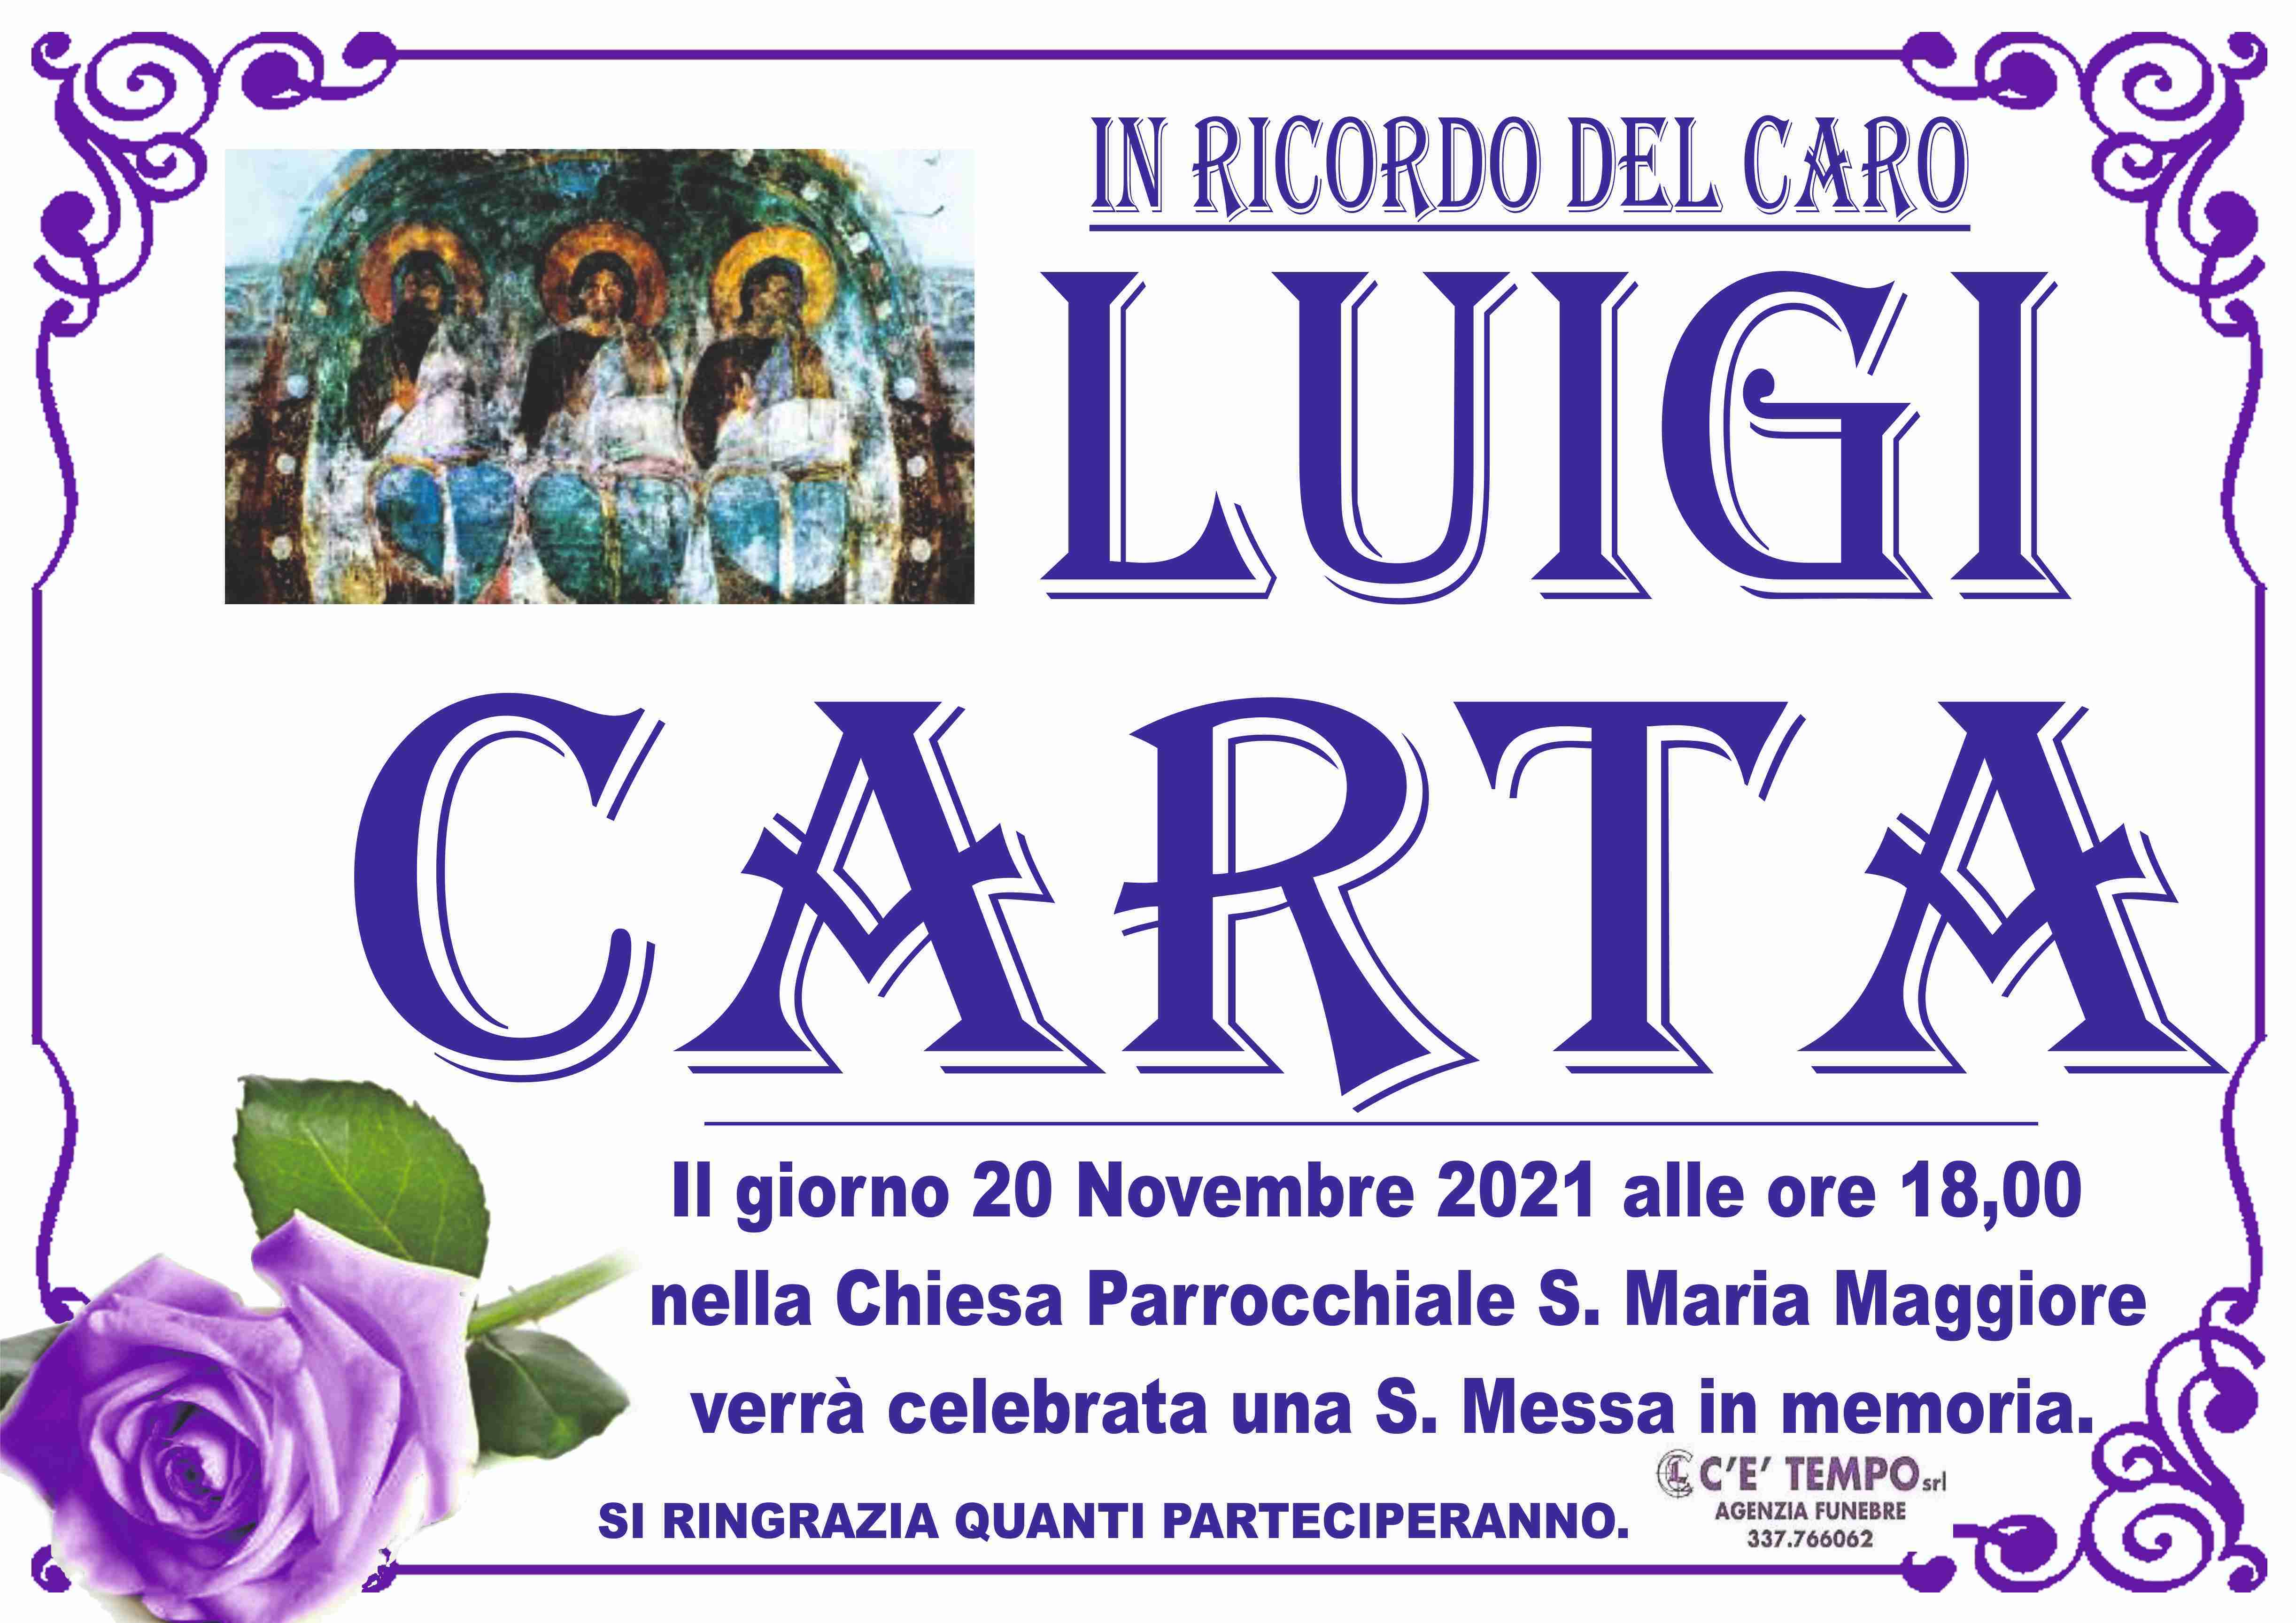 Luigi Carta